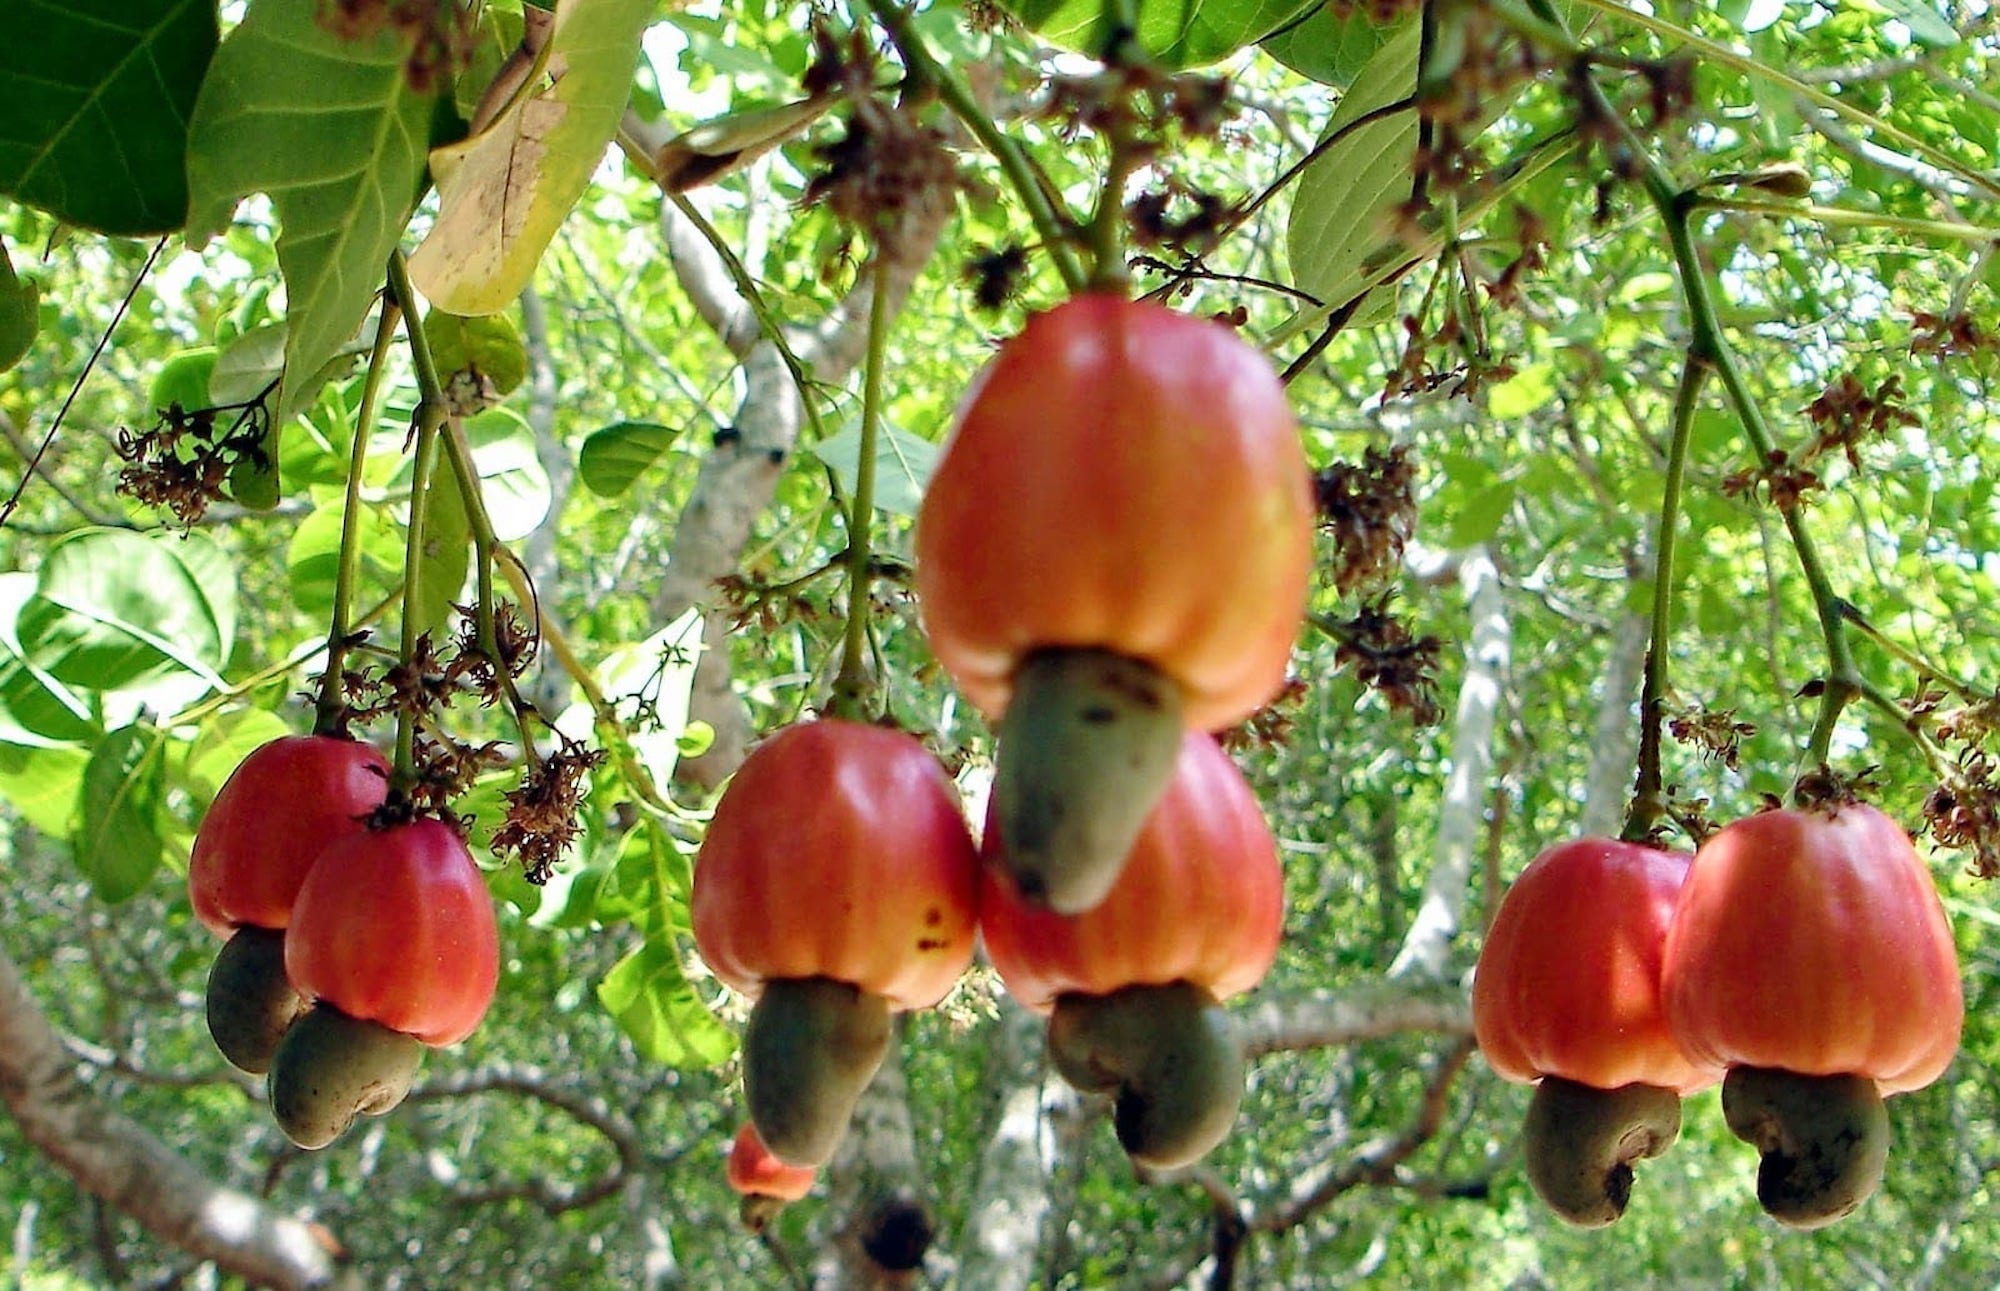 India, Vietnam and China top destinations for Guinea-Bissau cashew